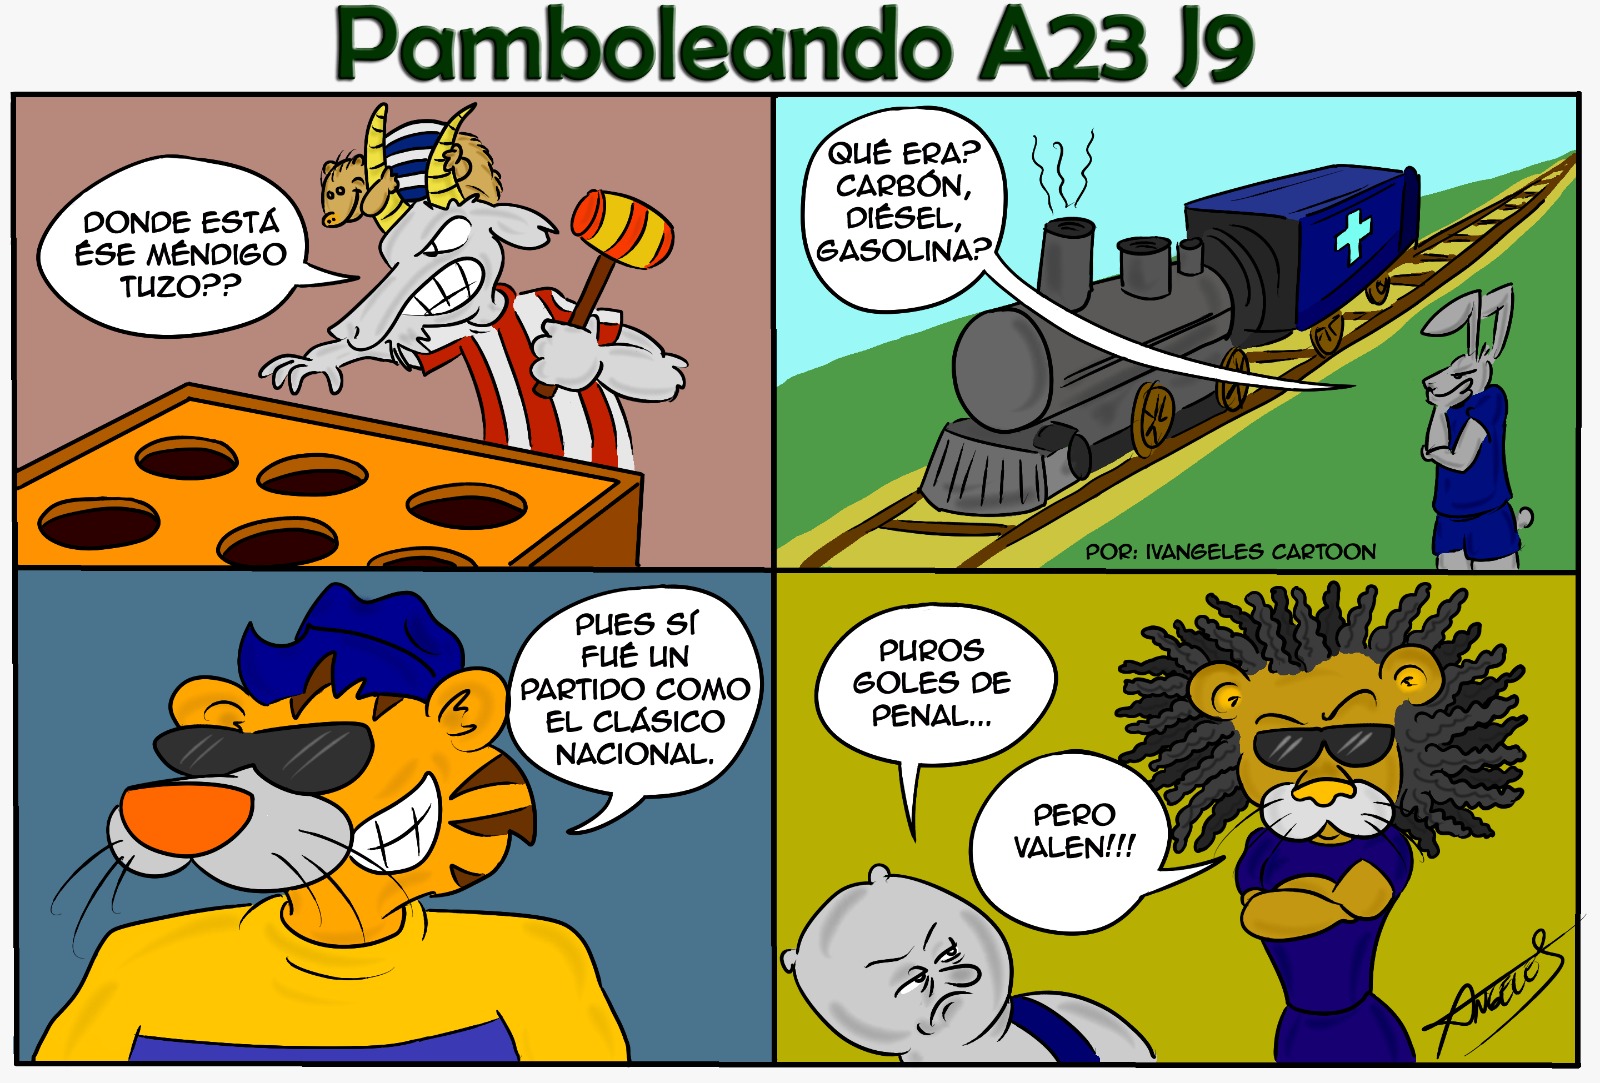 Pamboleando Jornada 23